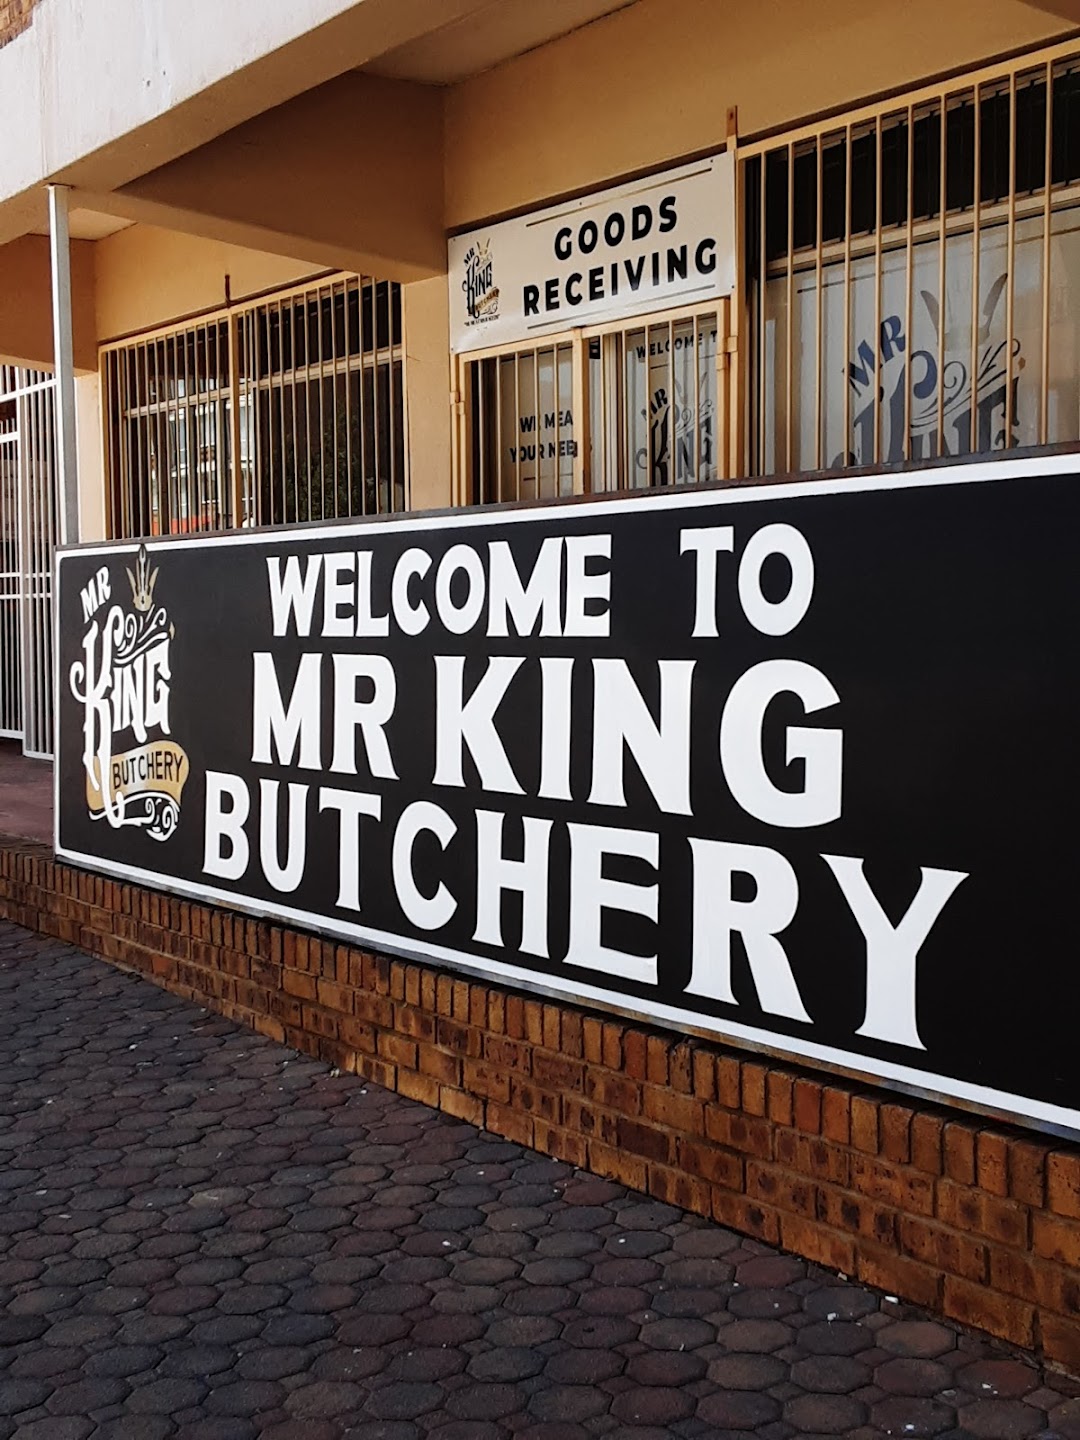 Mr King Butchery